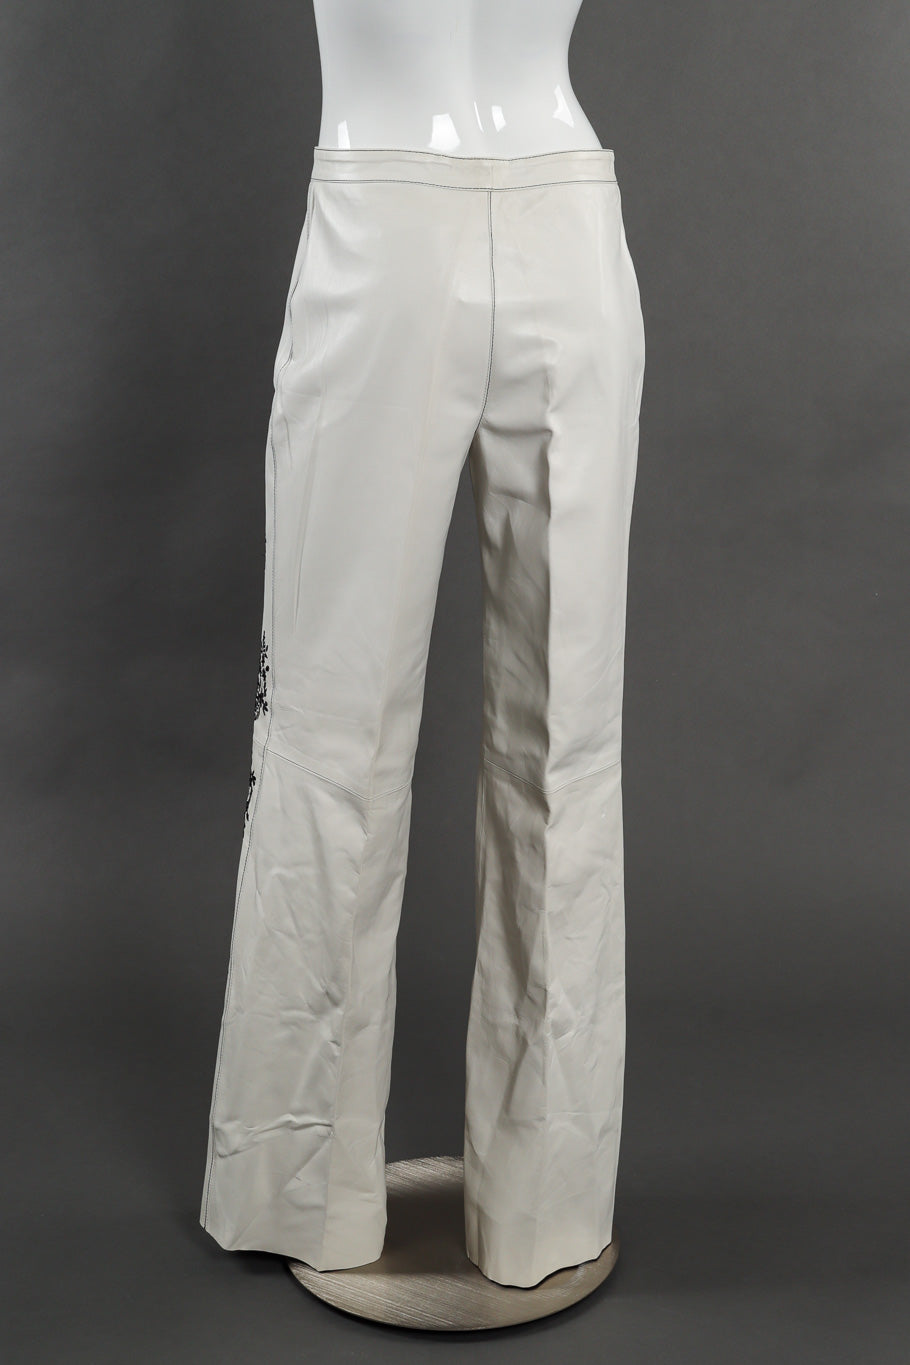 Vintage Estrella G Embroidered Leather Vest and Pant Set back view of pant on mannequin @Recessla